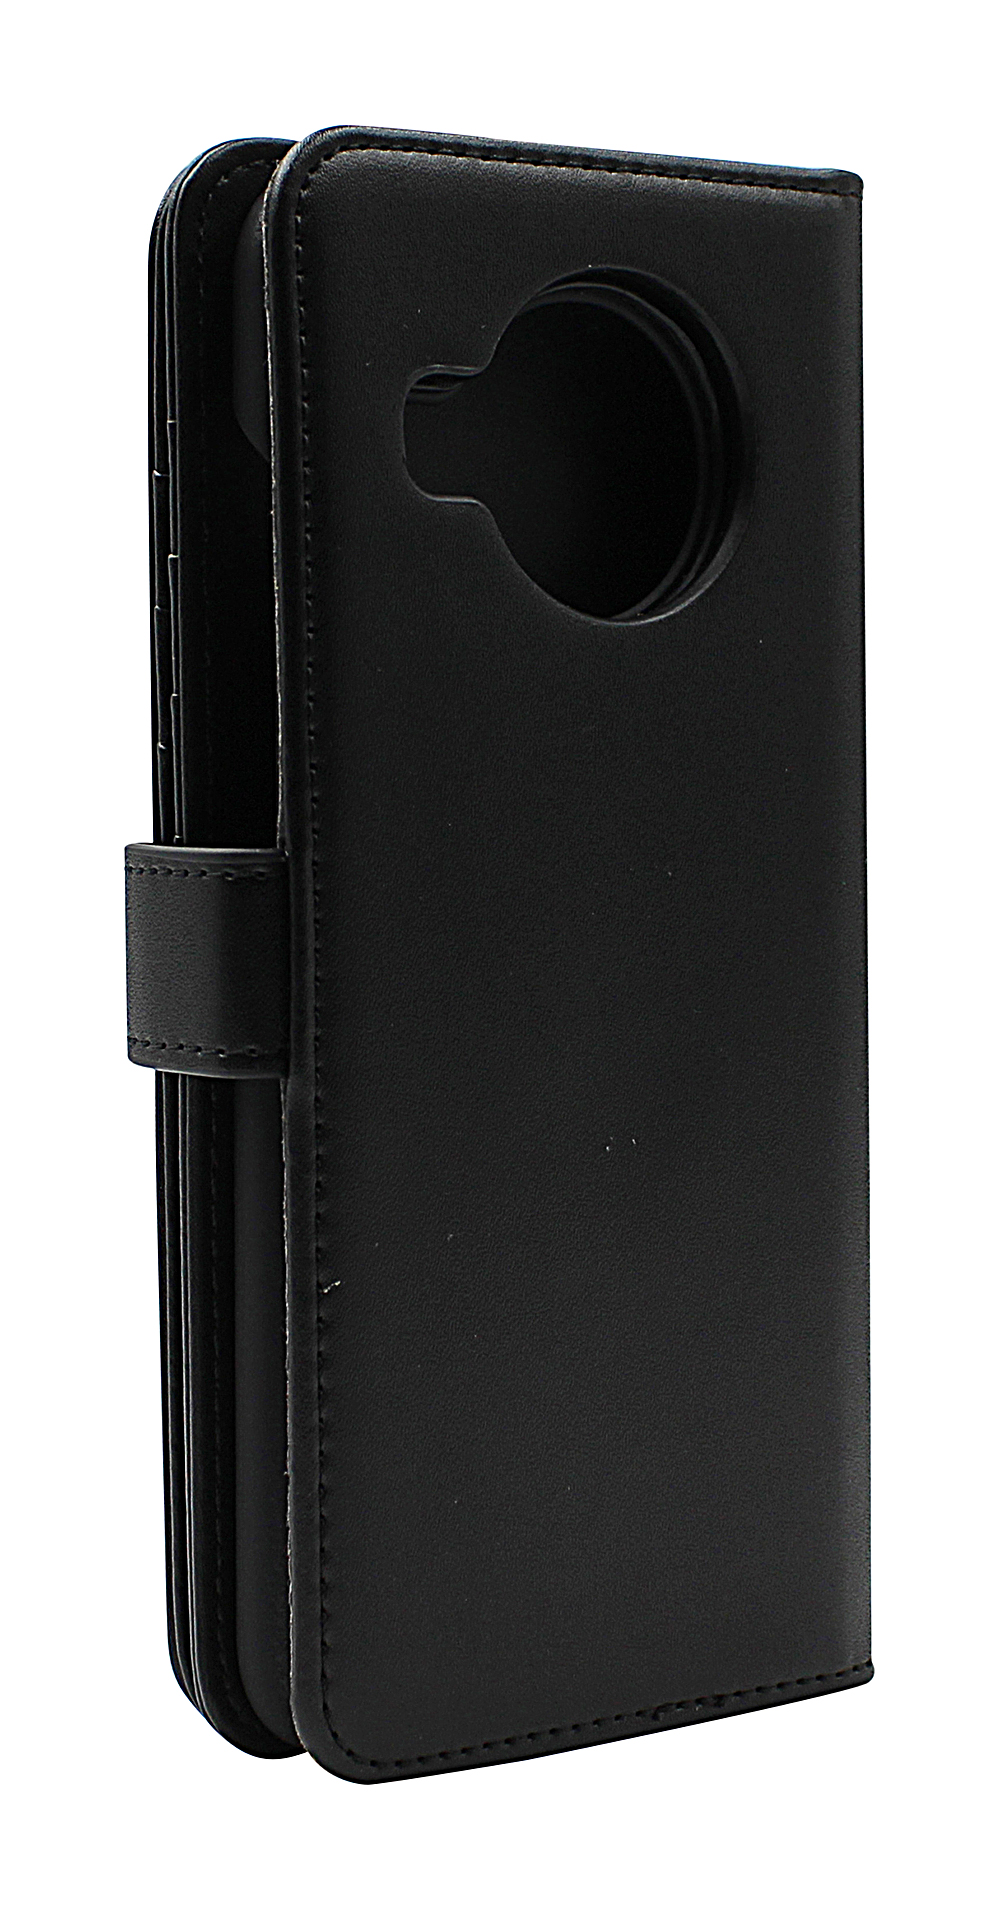 CoverInSkimblocker XL Magnet Fodral Nokia X10 / Nokia X20